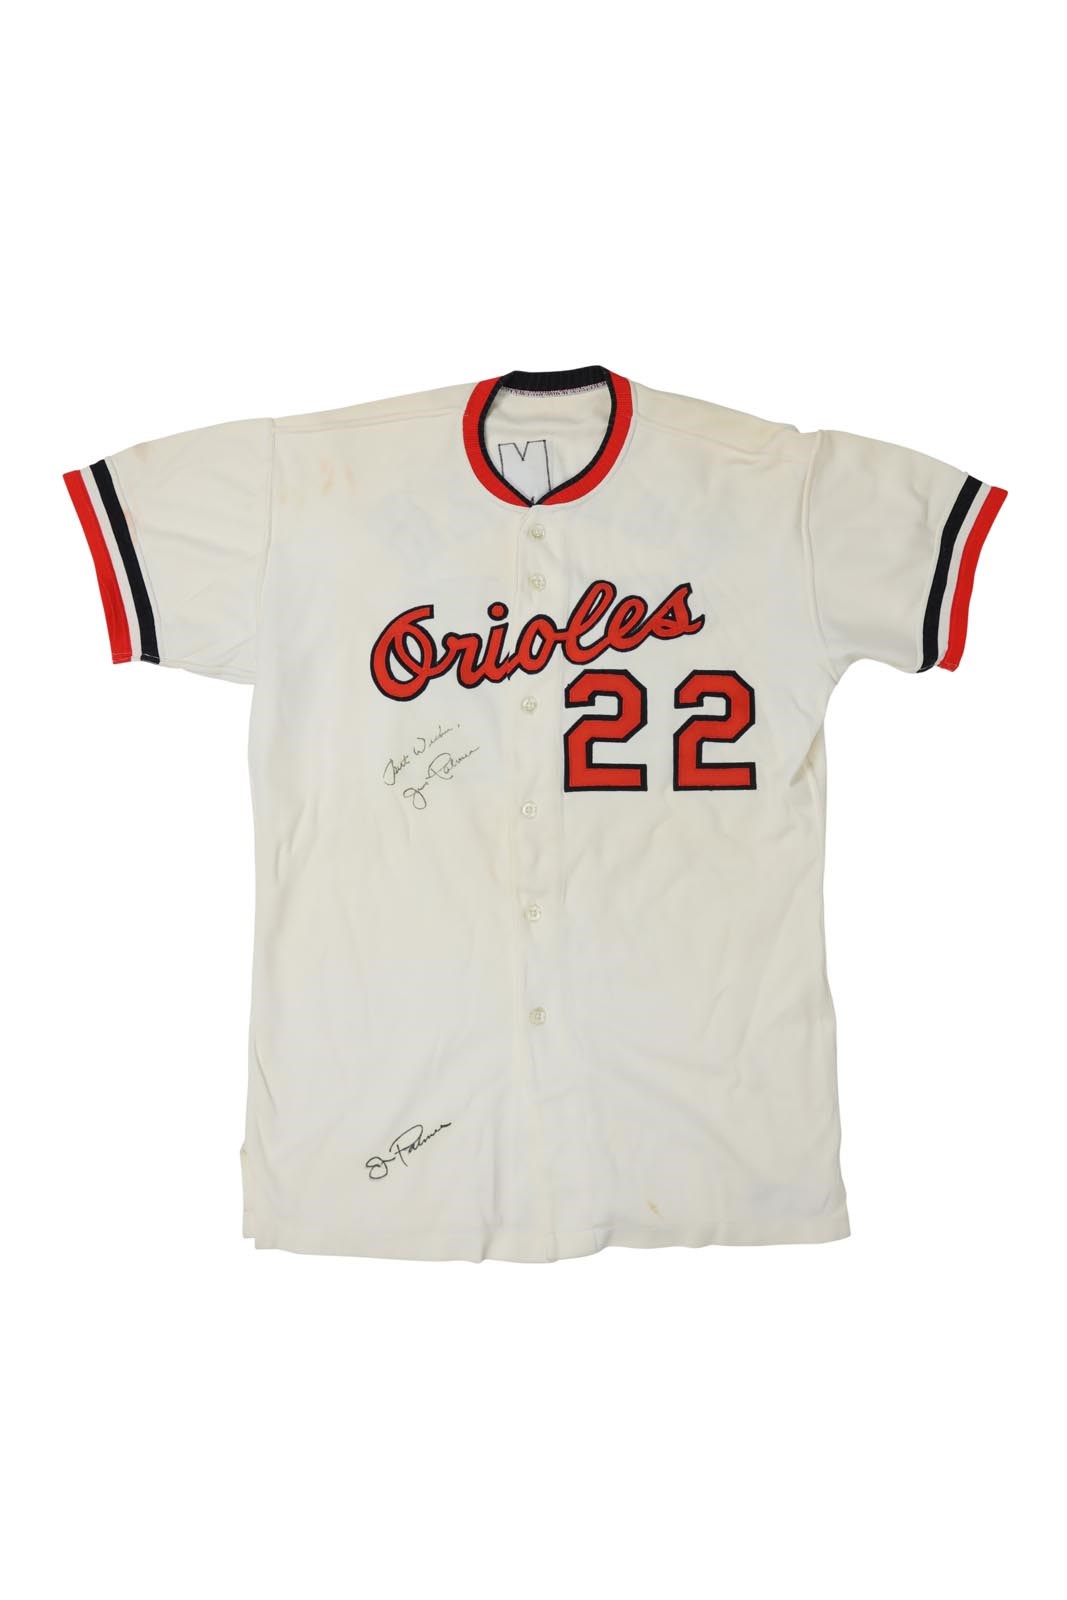 1980 Jim Palmer Game Worn Baltimore Orioles Uniform, MEARS A9.5